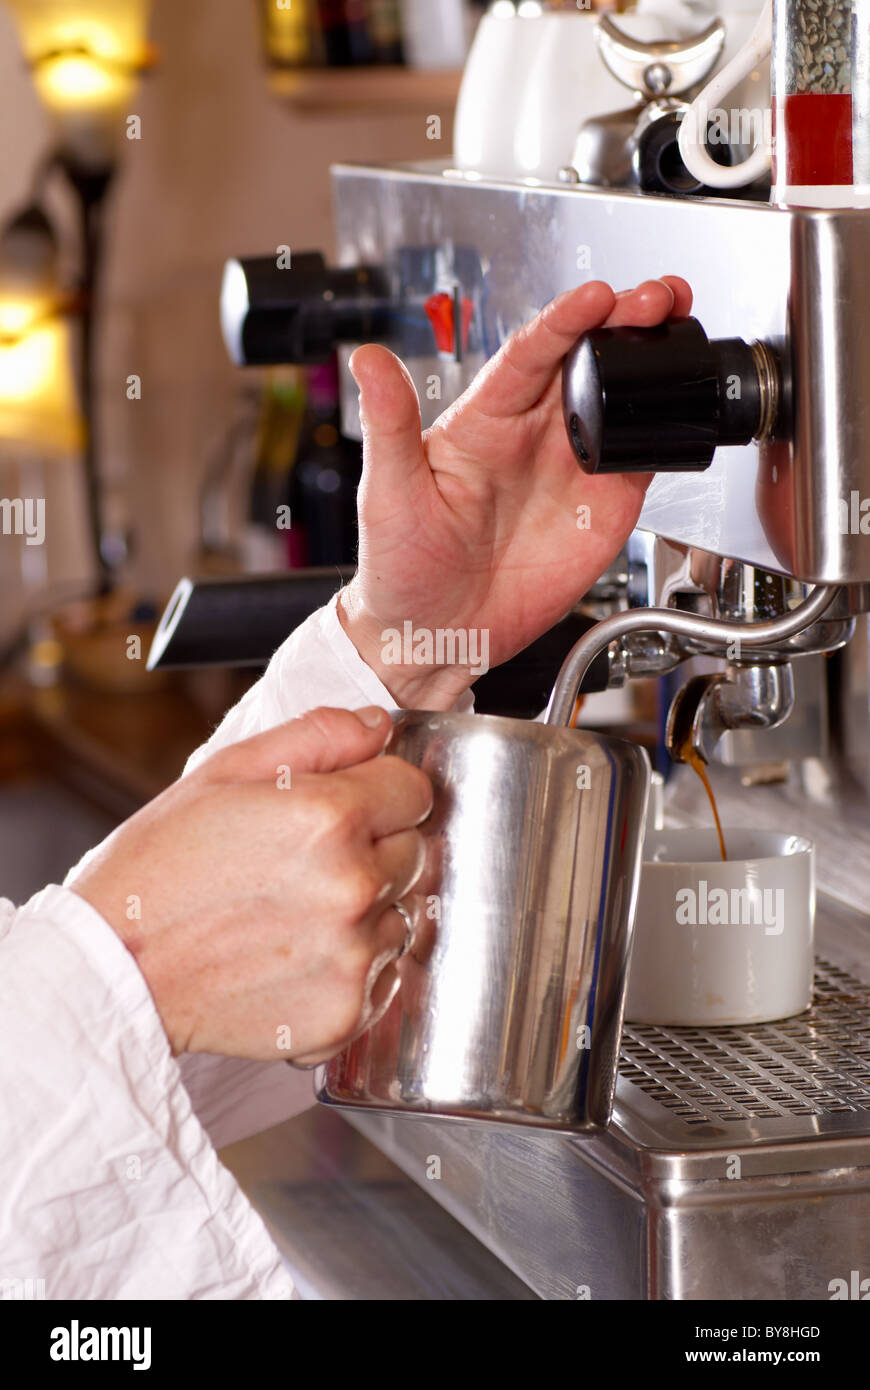 Coffee machine, cafe shop. Espresso preparation, professional equipment  background, takeaway service Stock Photo - Alamy